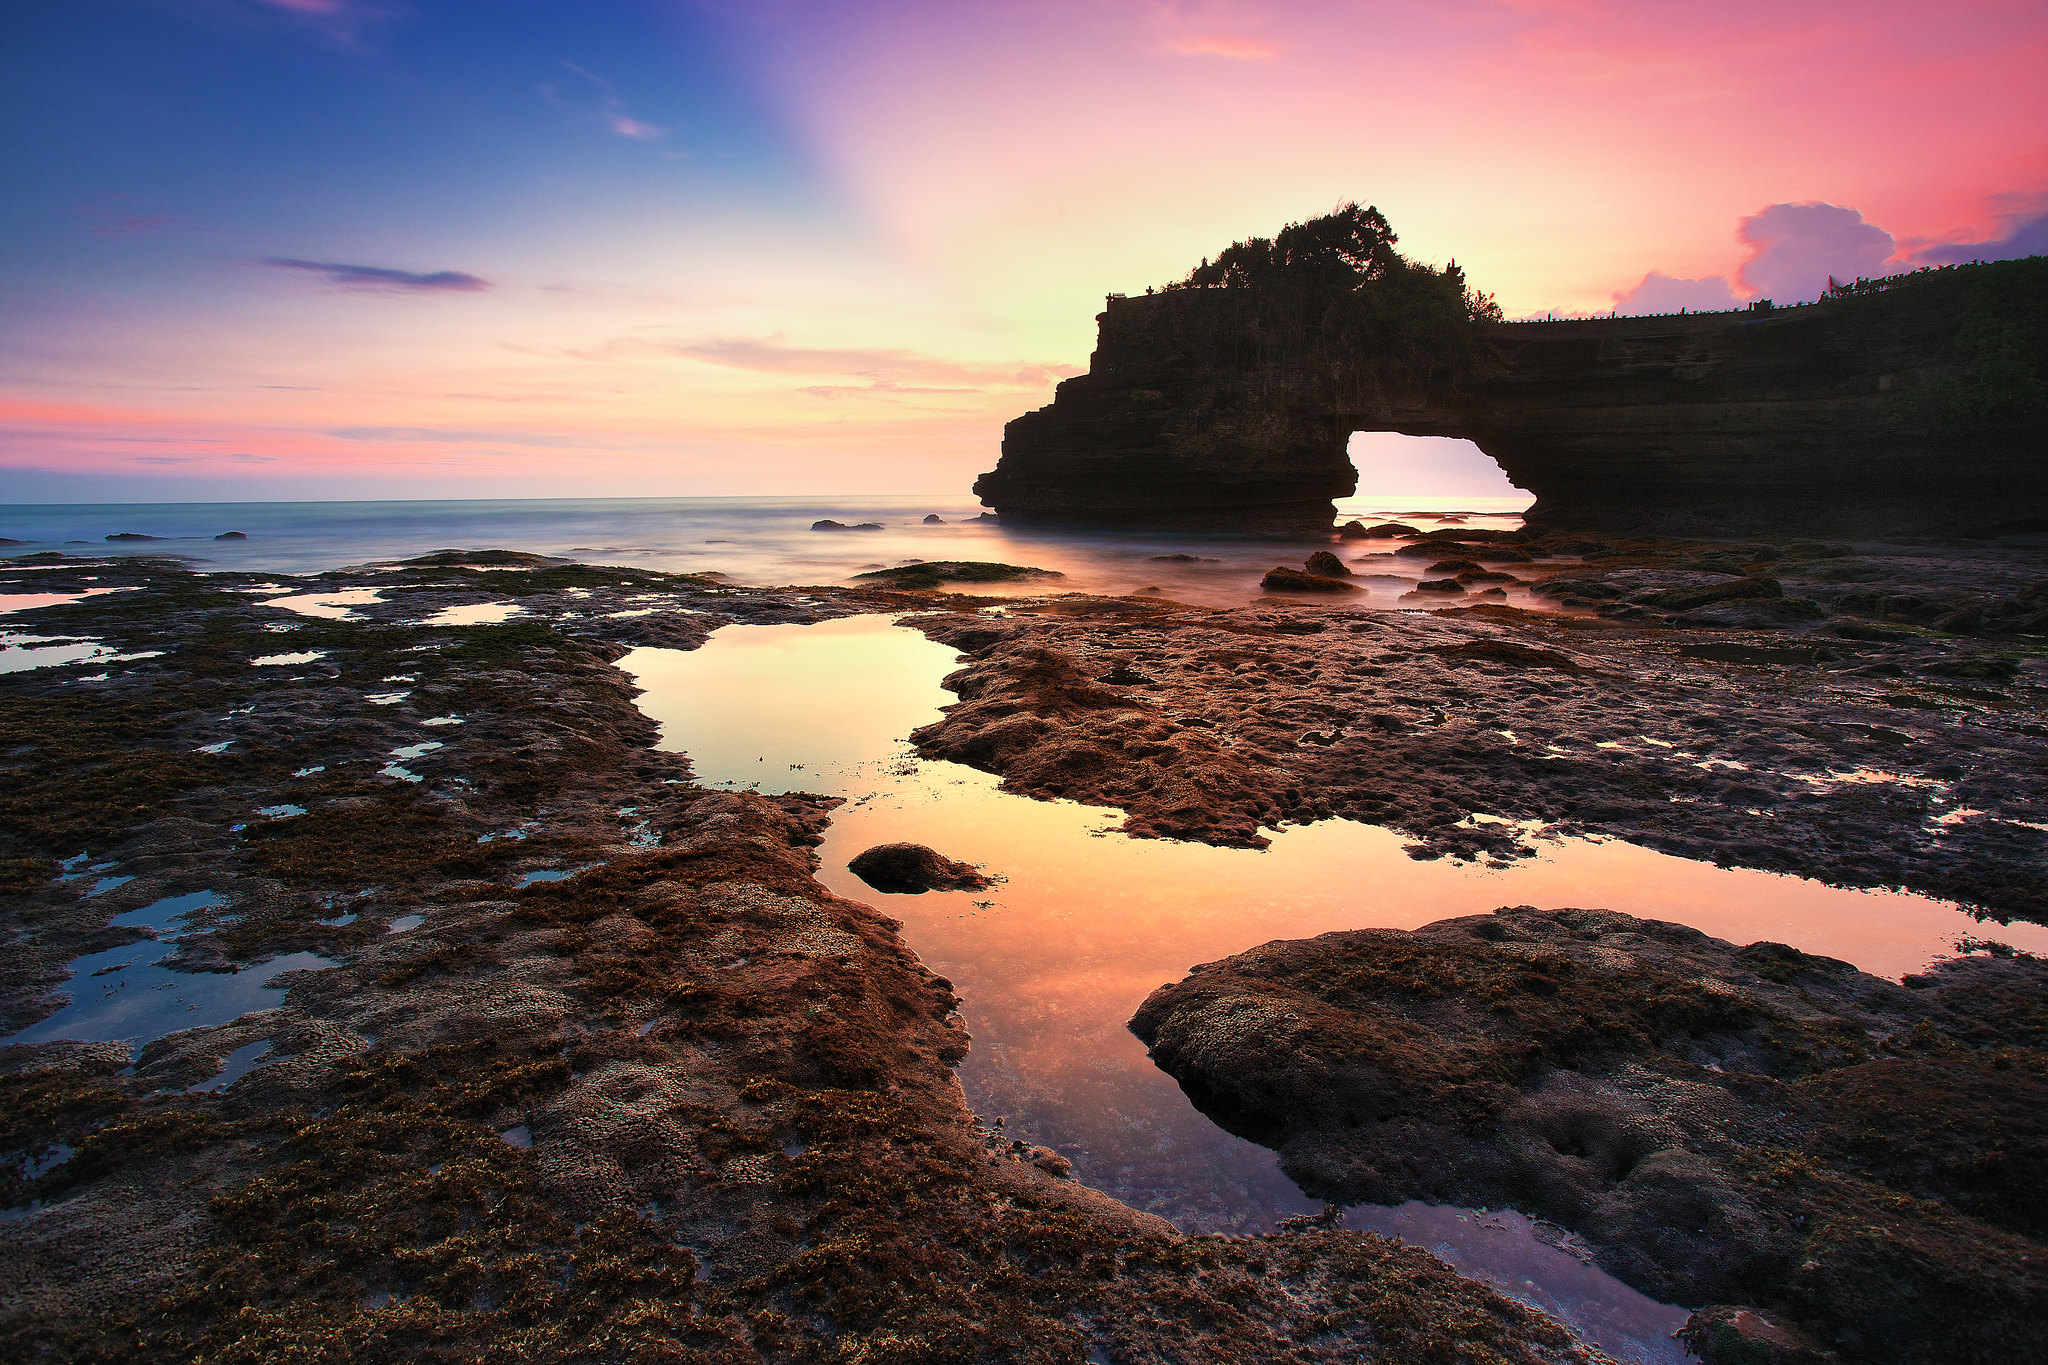 Expose Nature: Wonderful sunset at Batu Bolong, Bali, Indonesia by